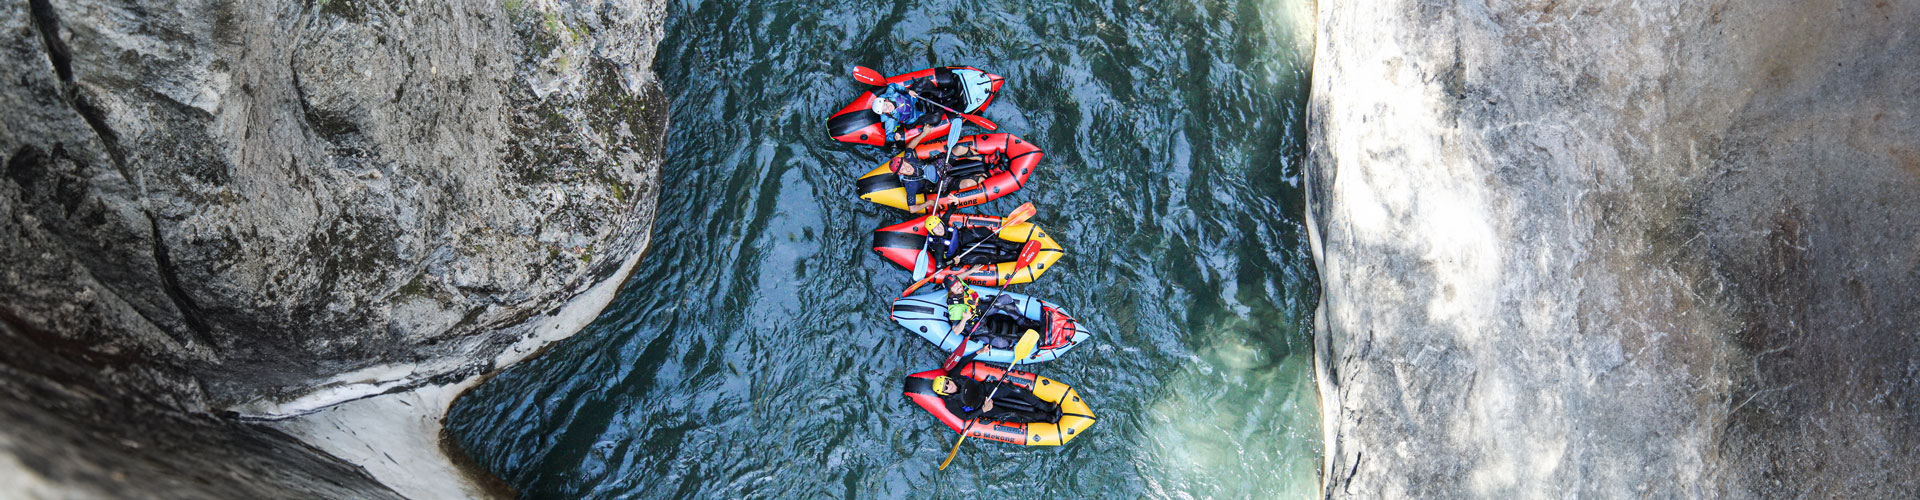 5 pack-raft sur l'Ubaye